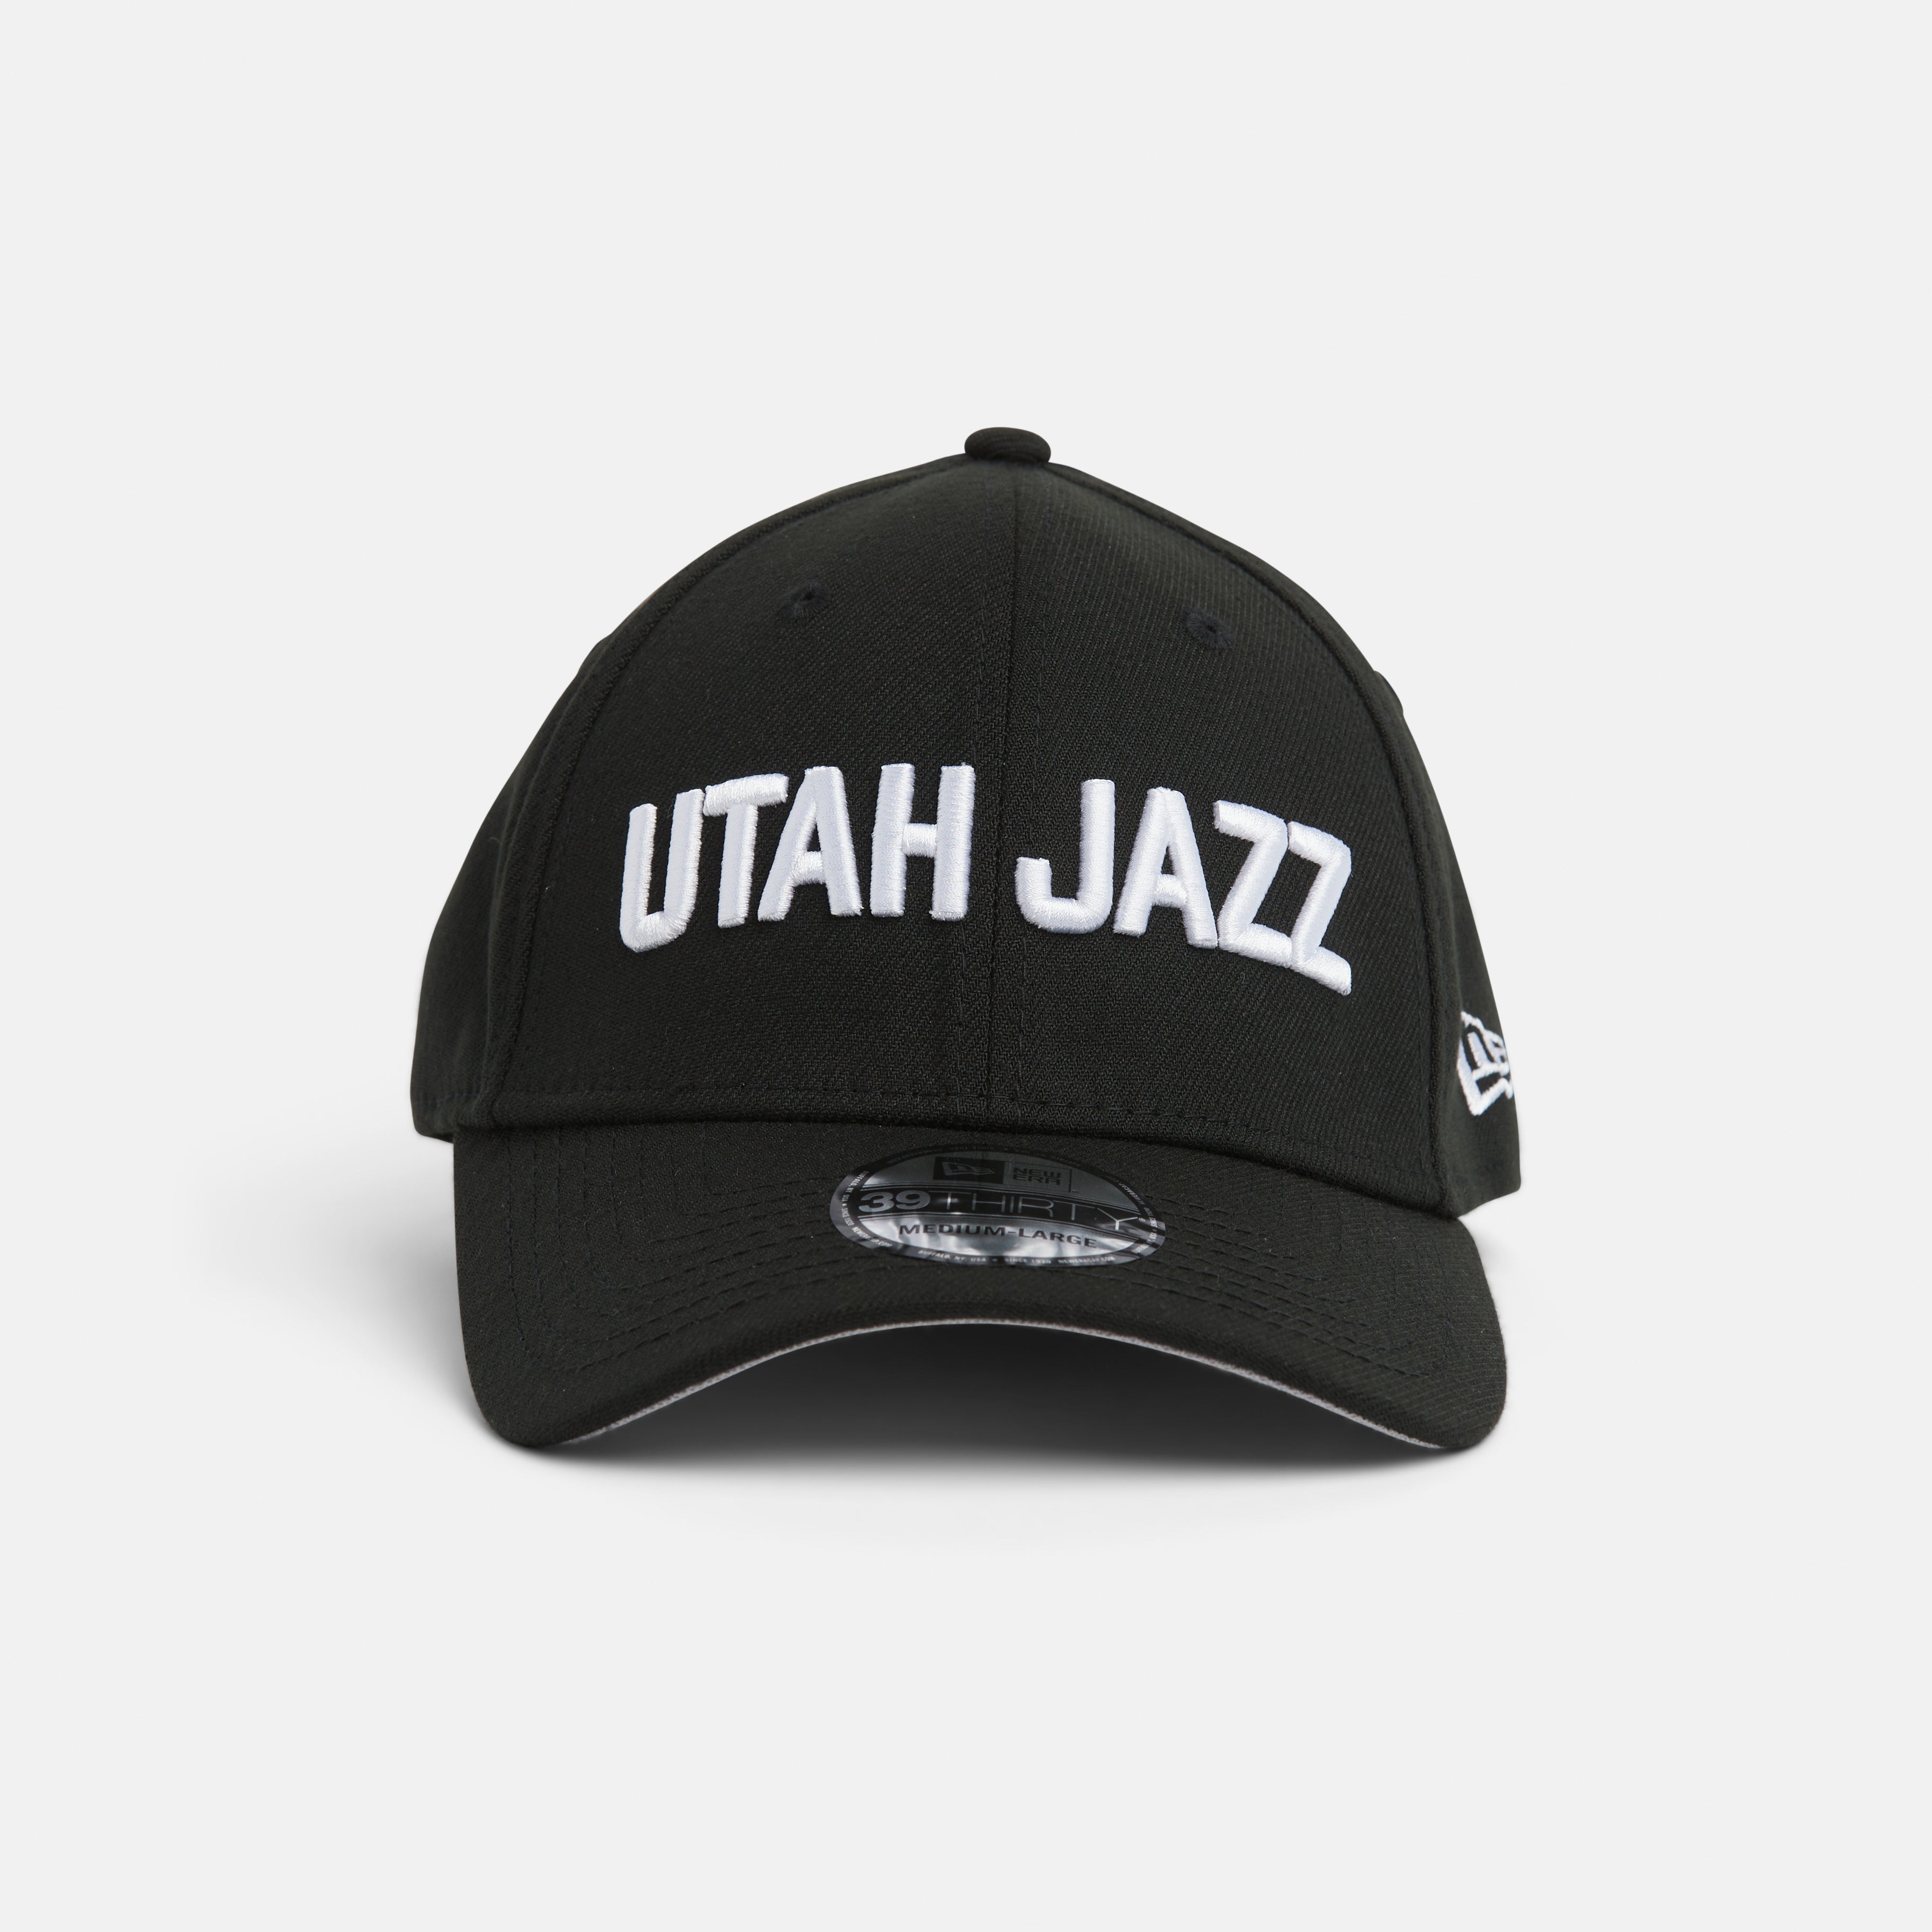 Front black 3930 with white Utah Jazz wordmark logo.